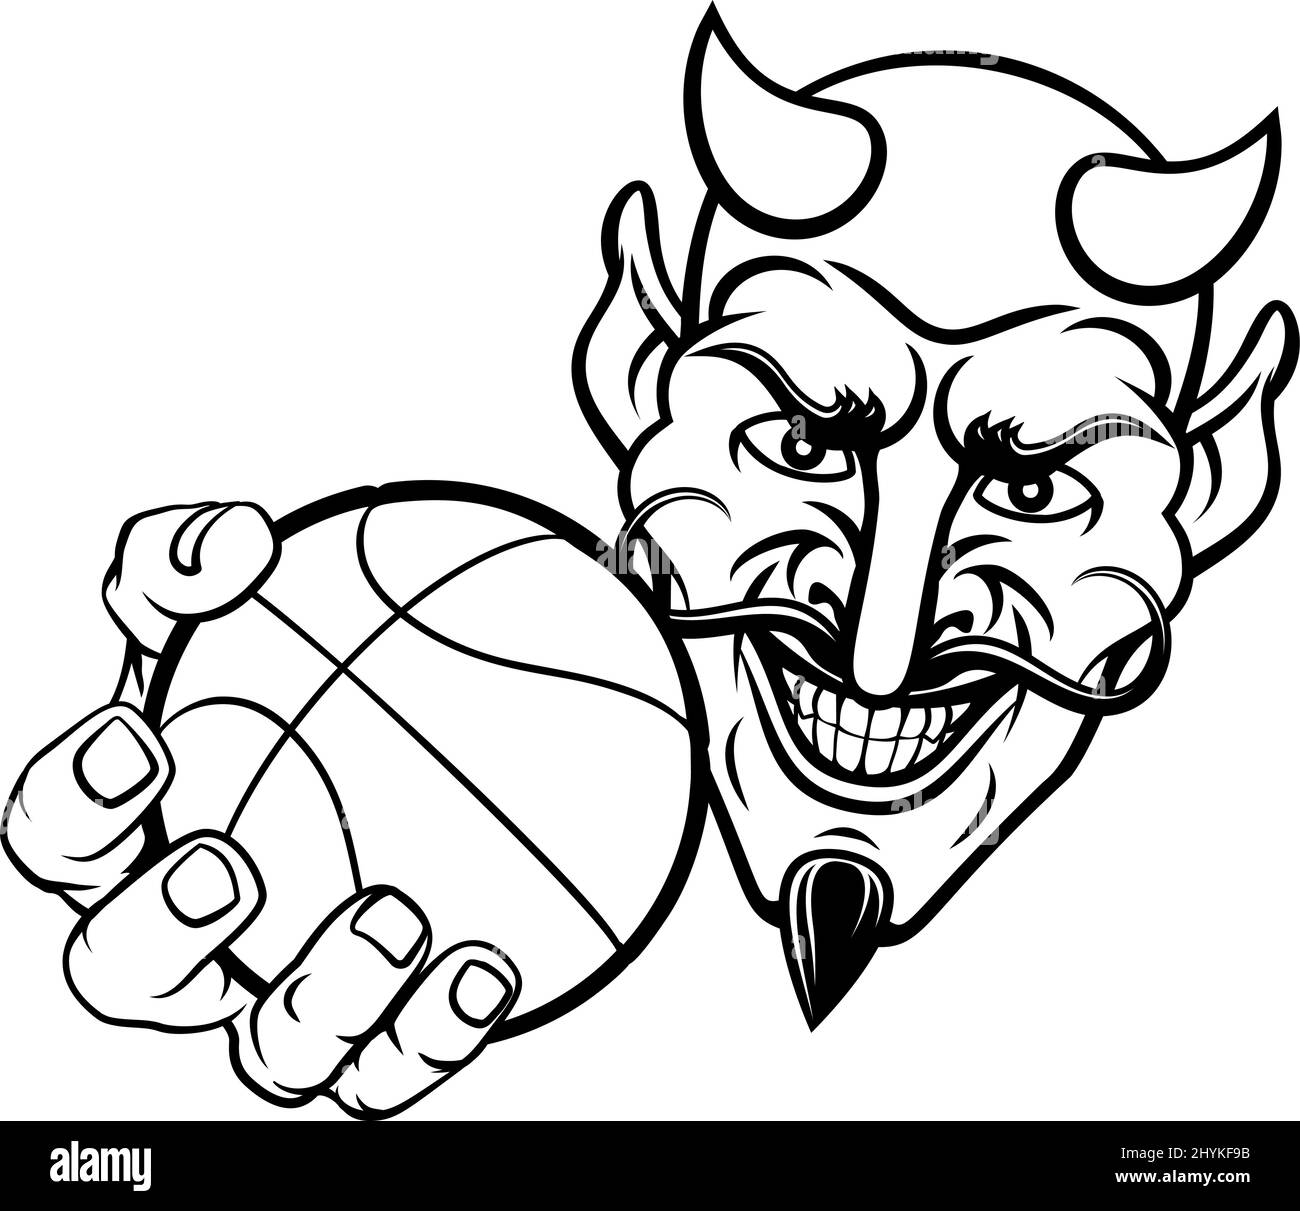 Devil Satan Basketball Sports Mascot Cartoon Stock Vector